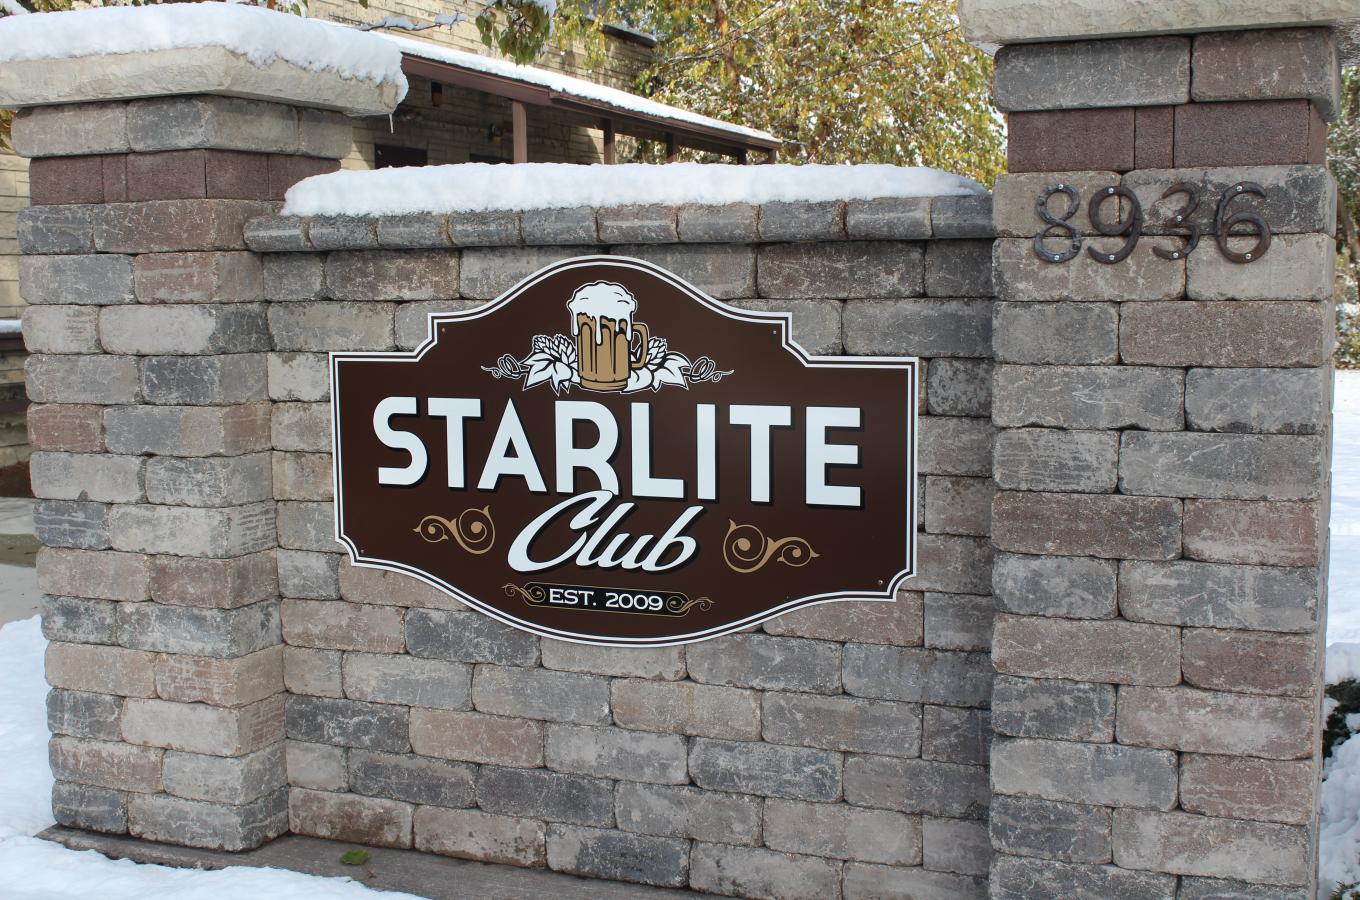 Starlite Club wall sign